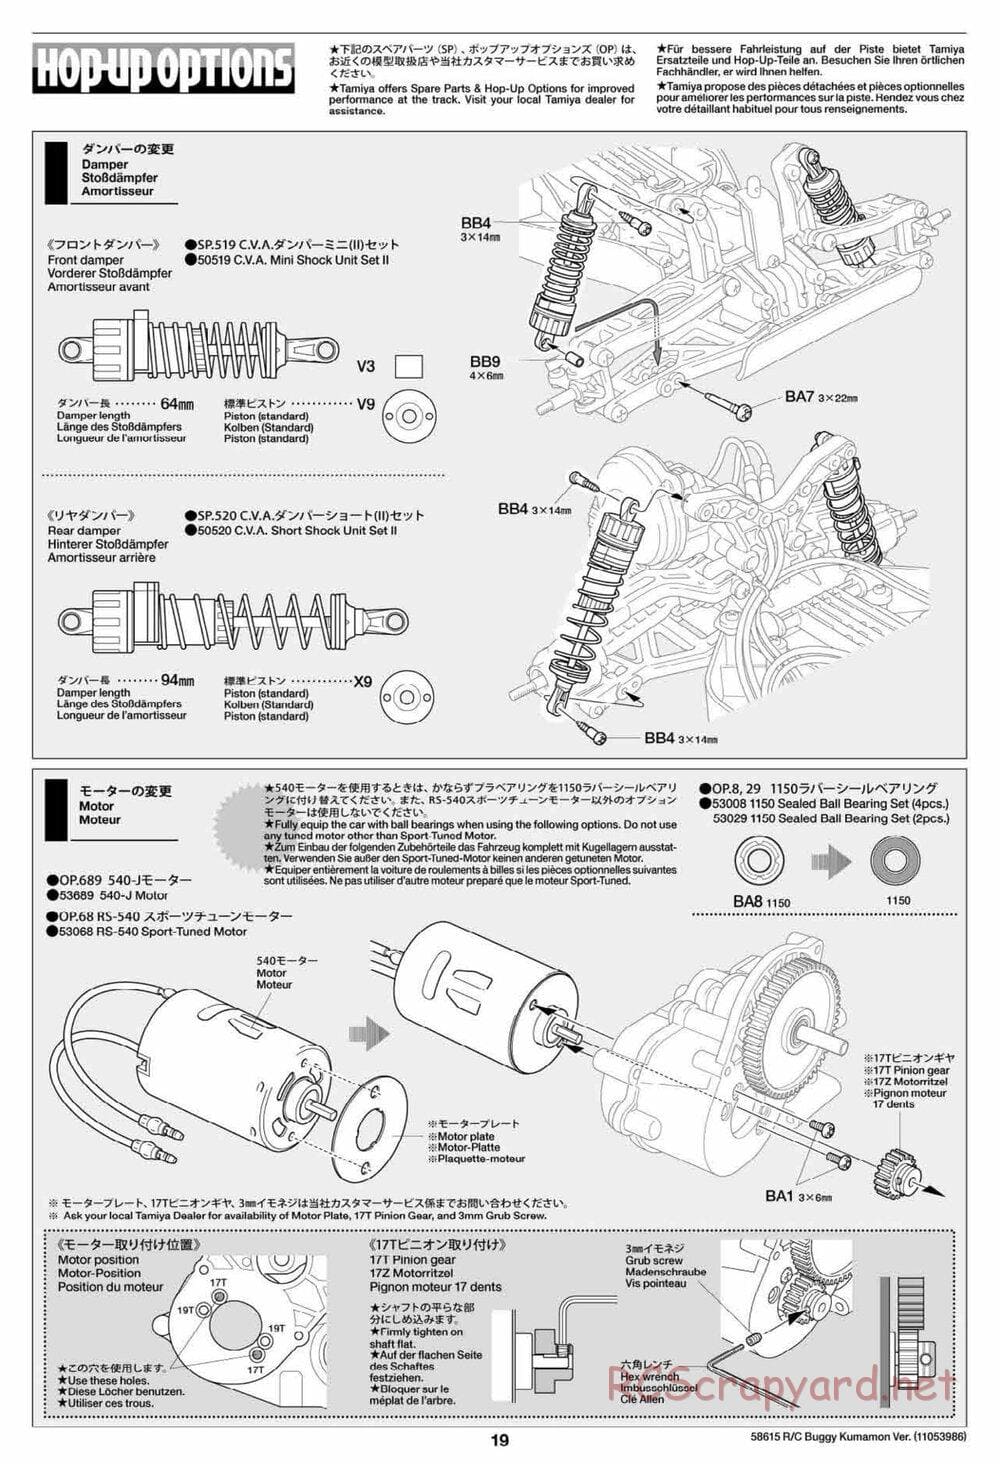 Tamiya - Buggy Kumamon Version Chassis - Manual - Page 19